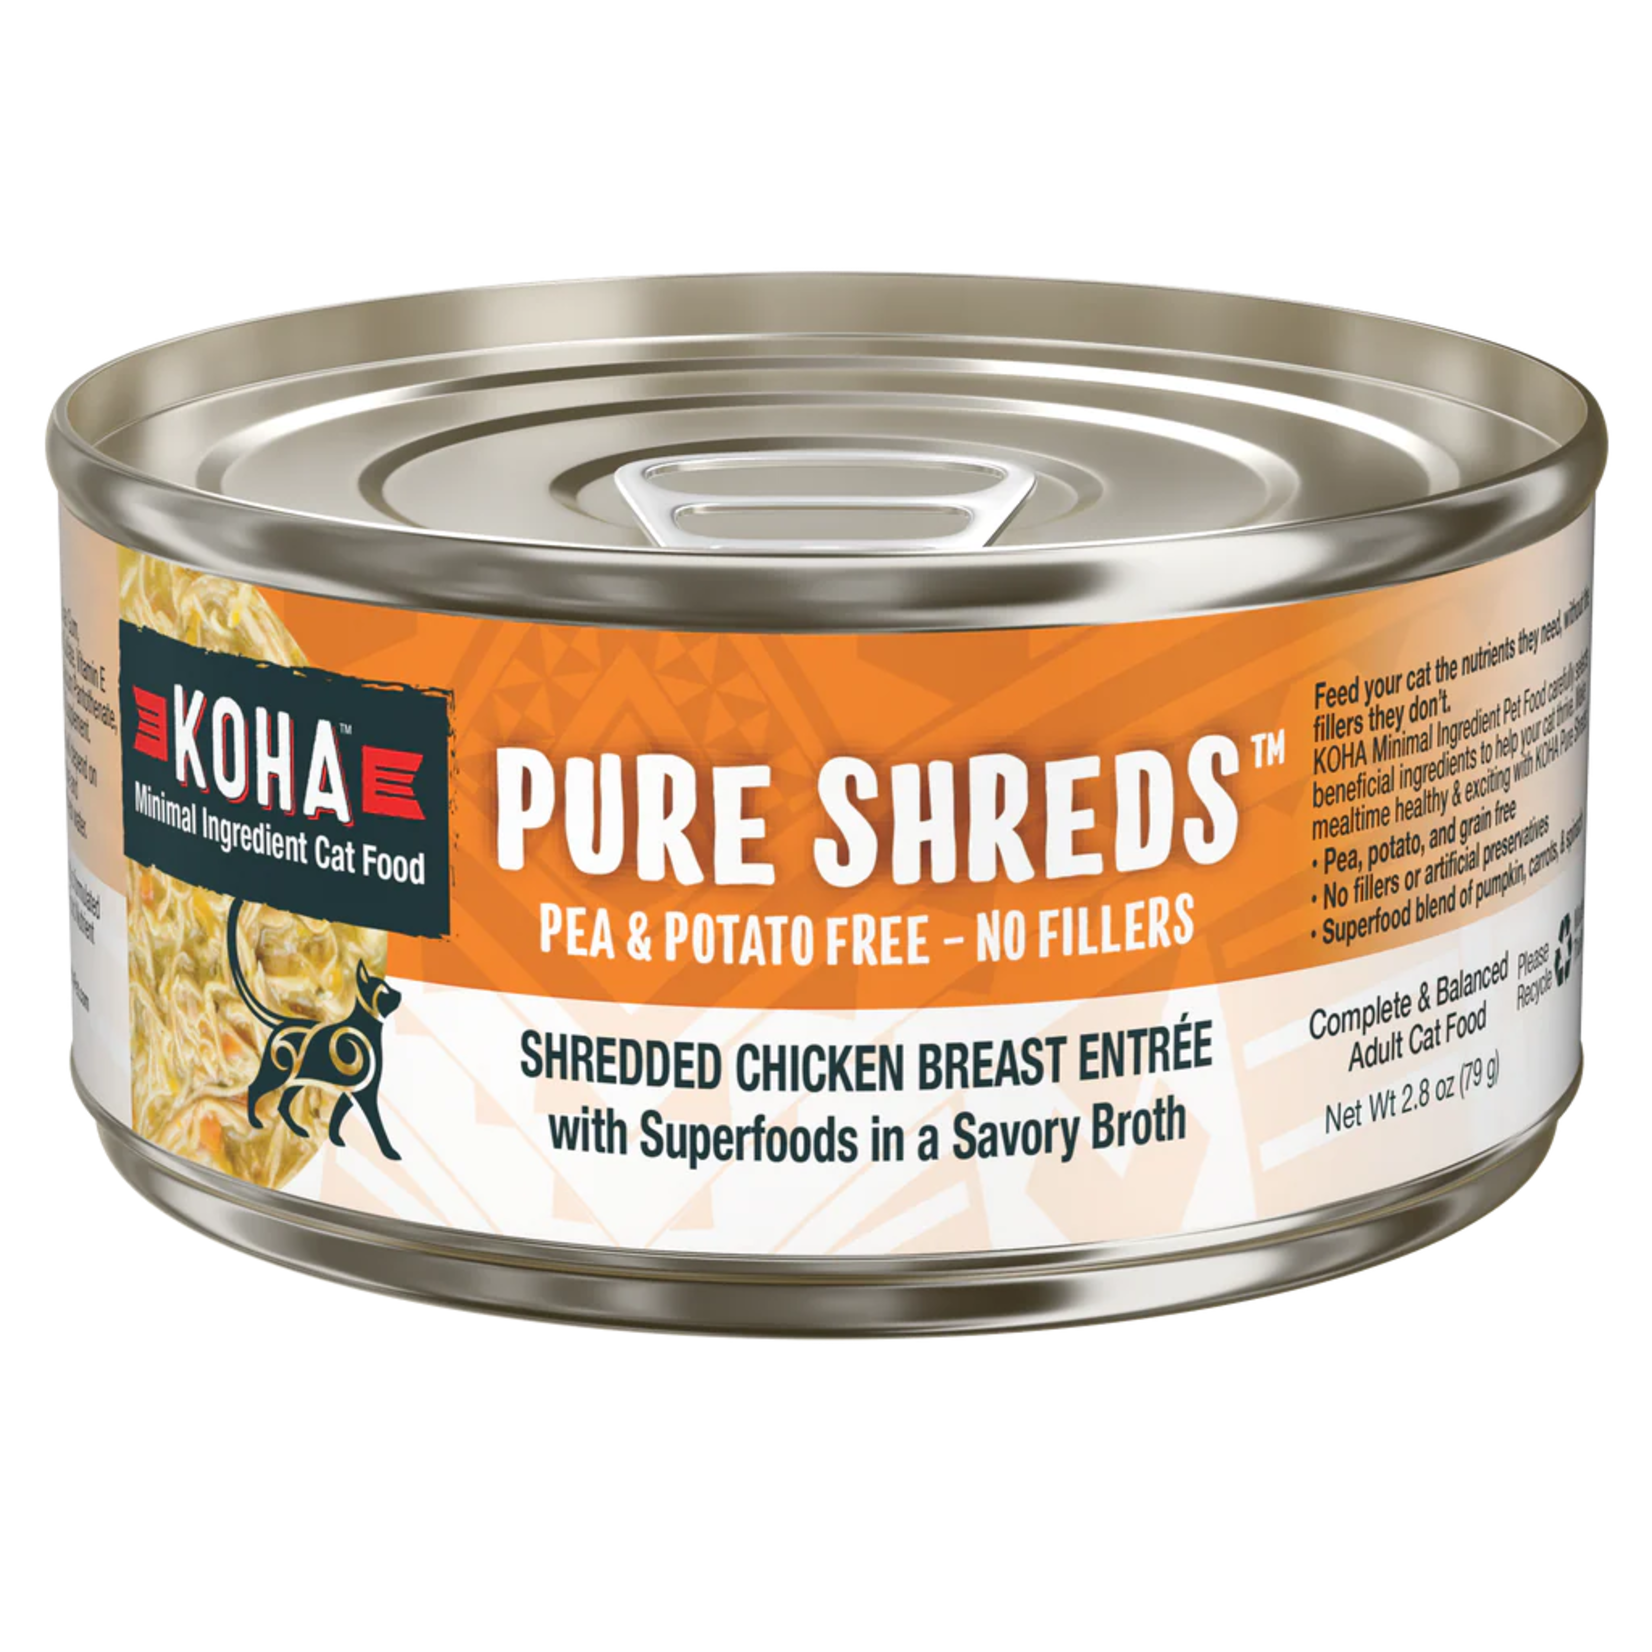 Koha Pet Food Koha Pet Food Pure Shreds - Shredded Chicken Breast Entrée for Cats